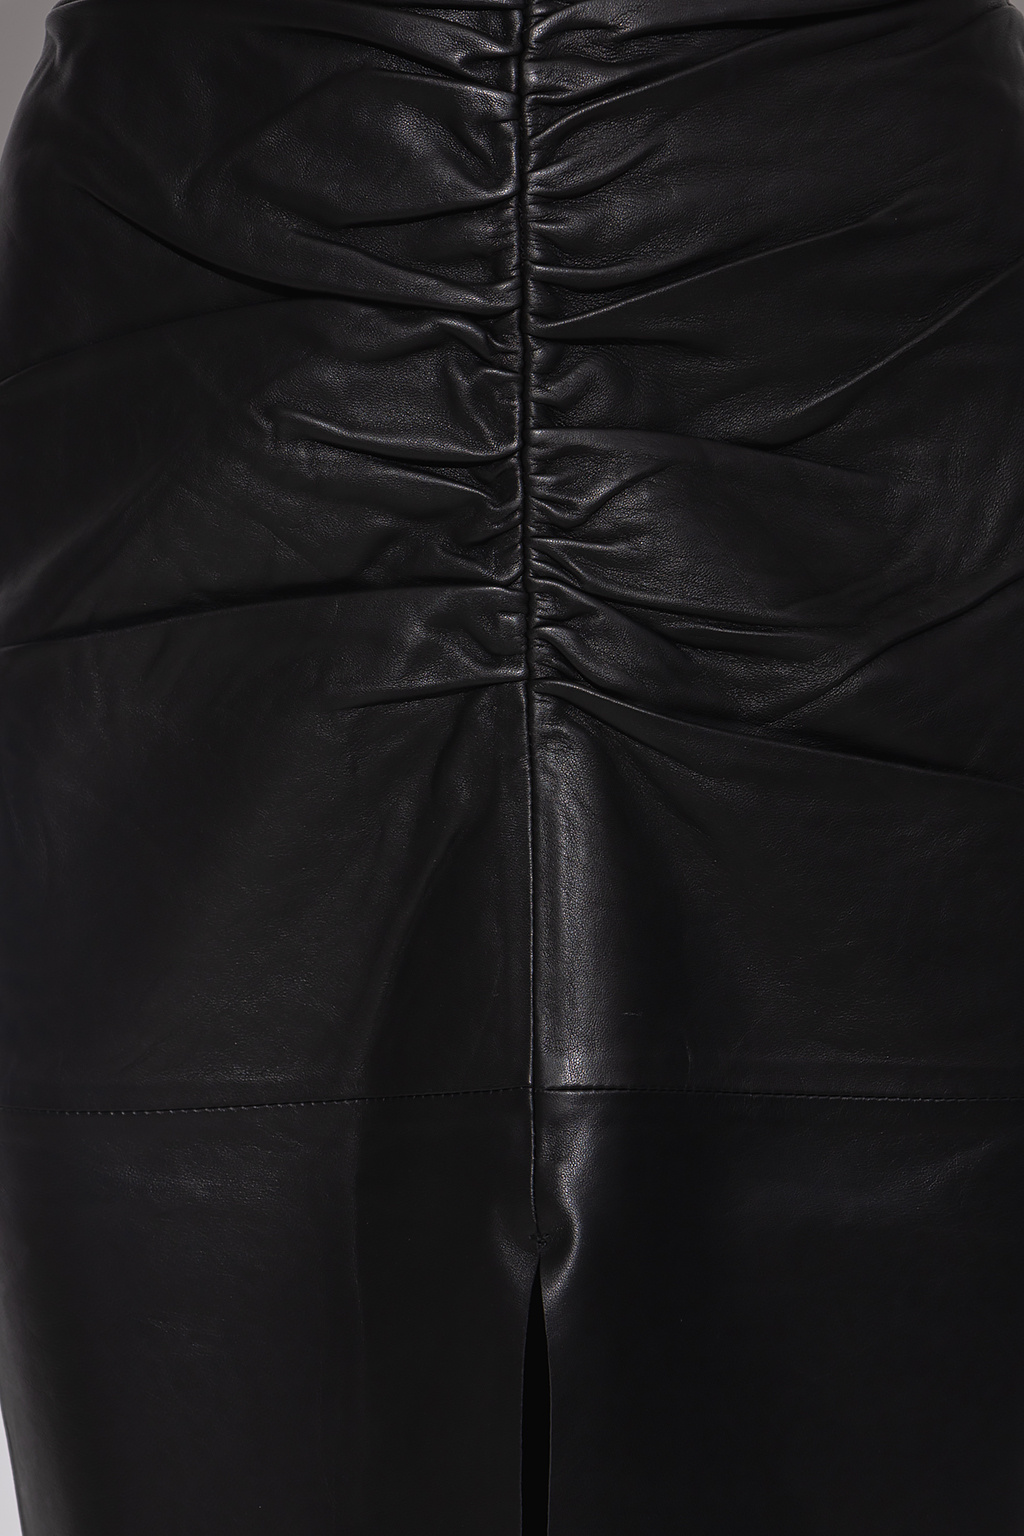 STANDARD NUMERIC/ITALIAN ROMAN ‘Chia’ leather skirt